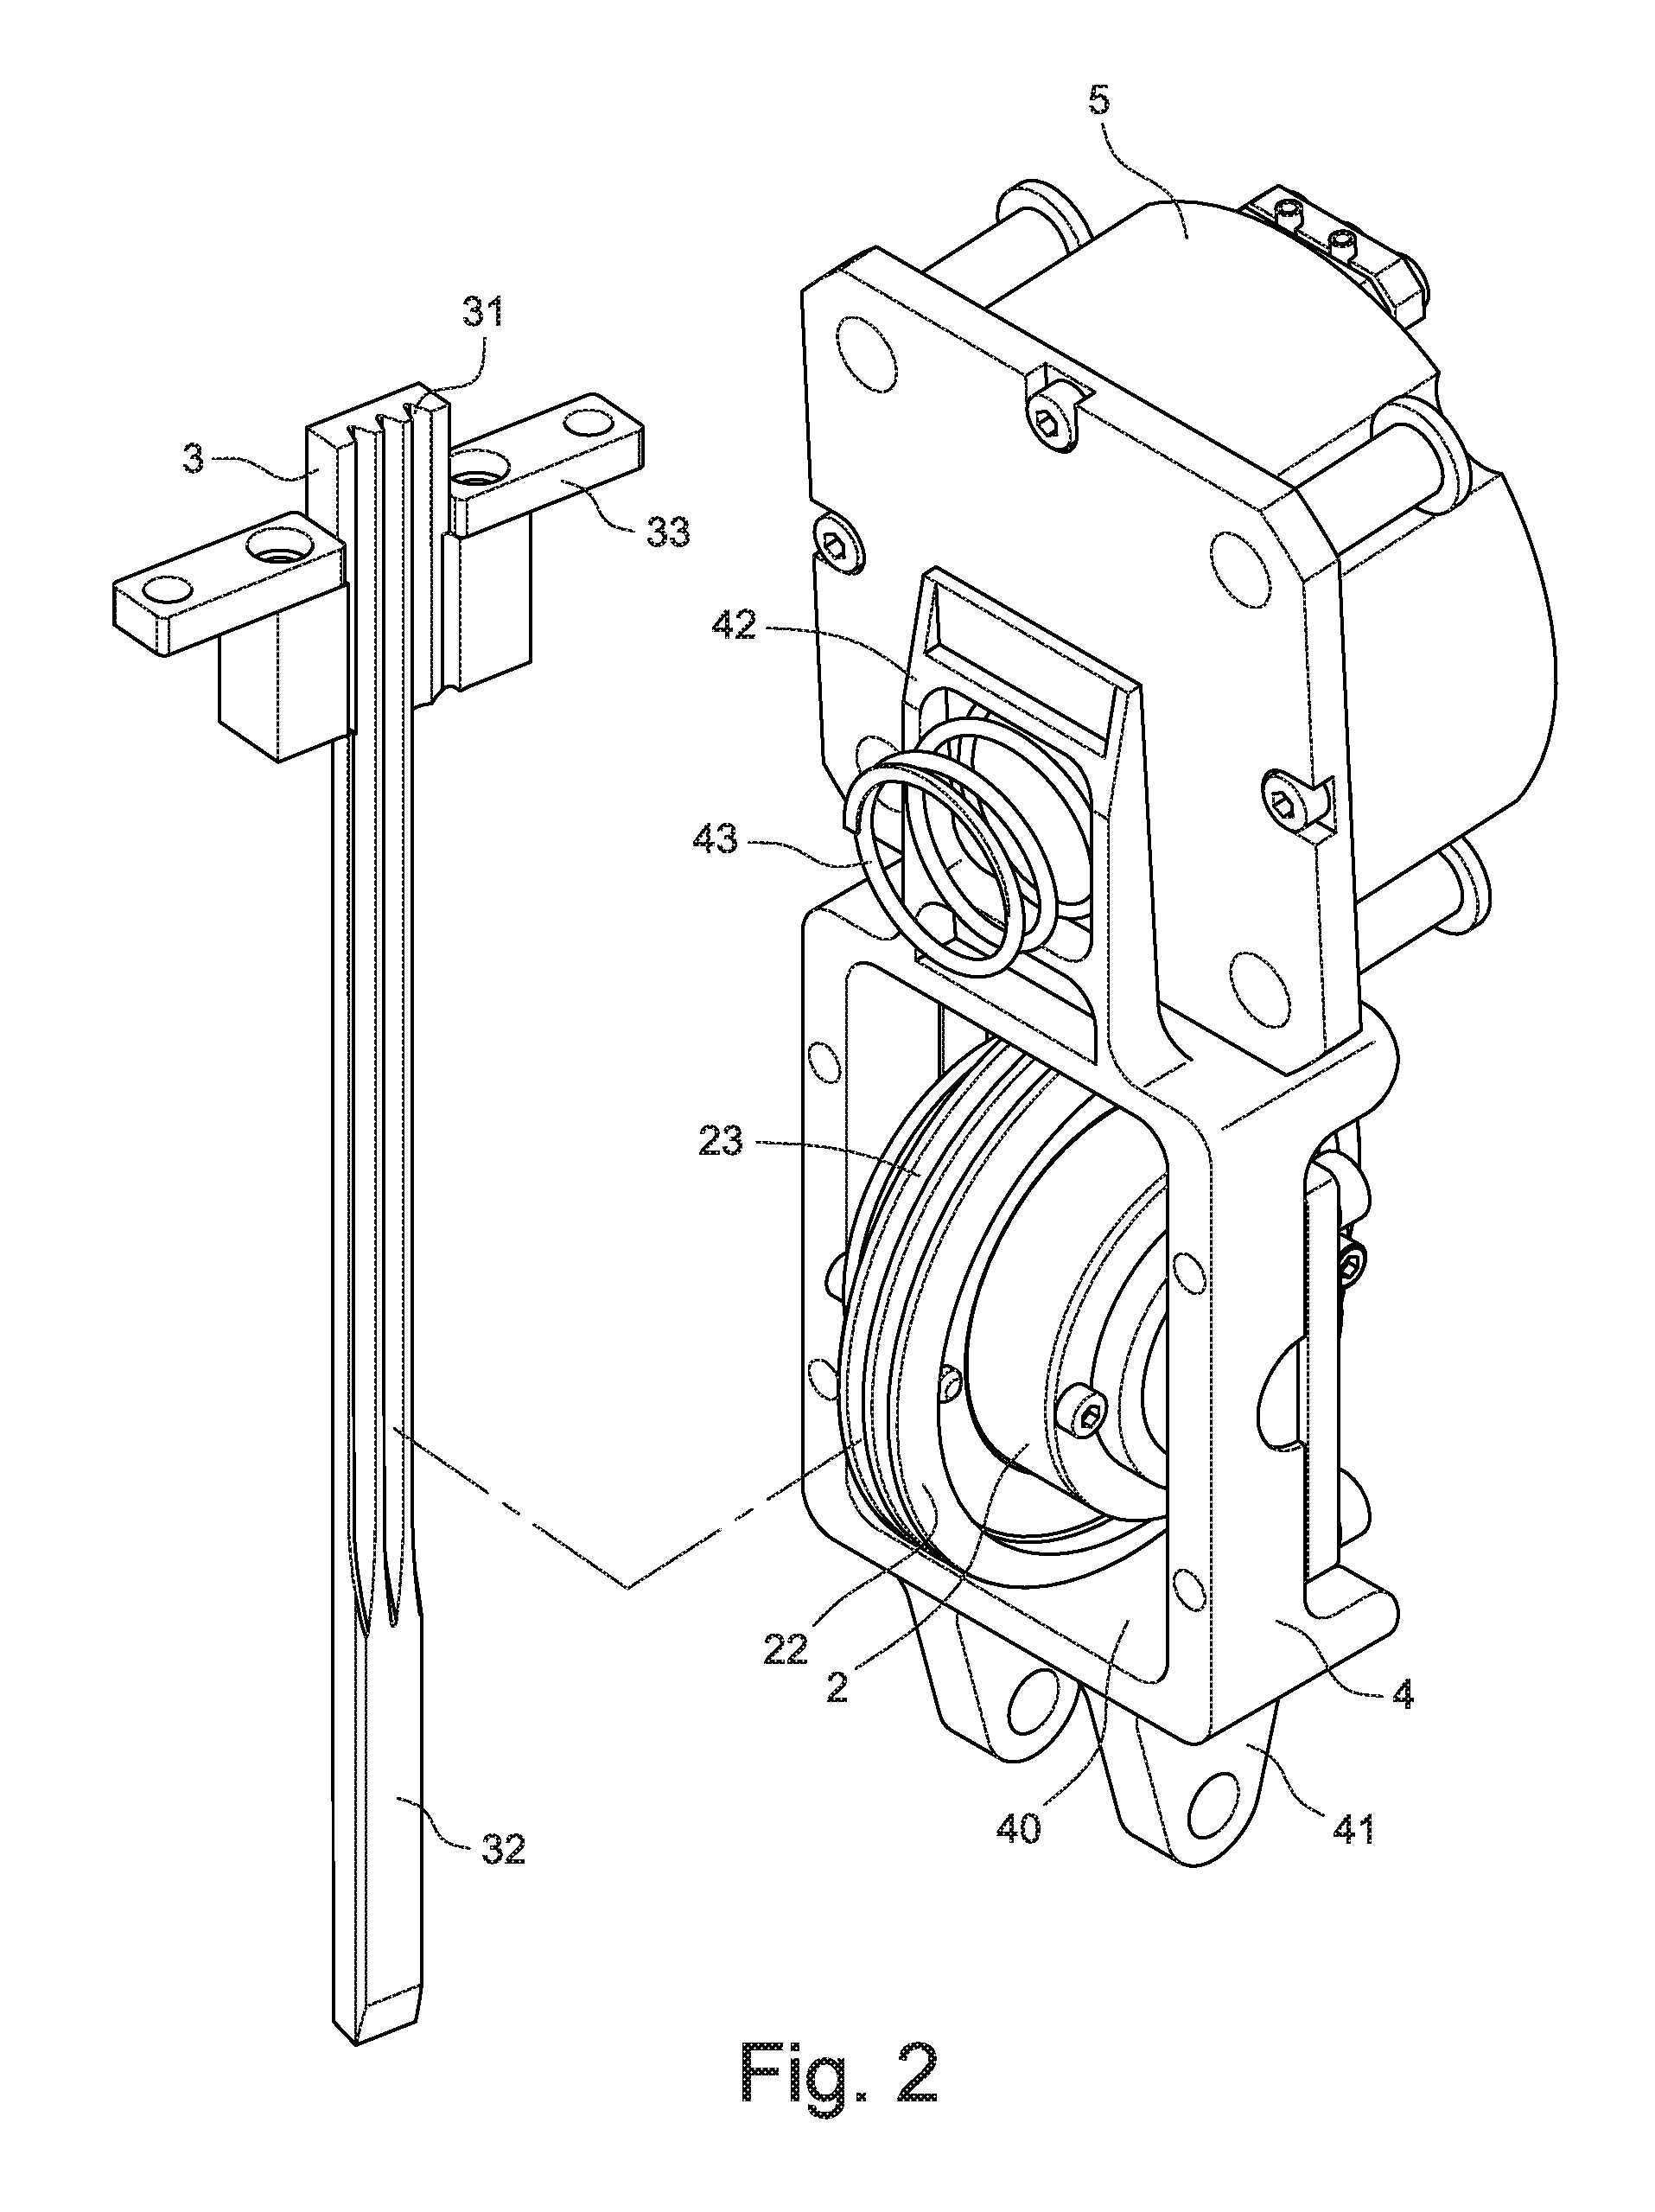 Actuator for electrical nail gun